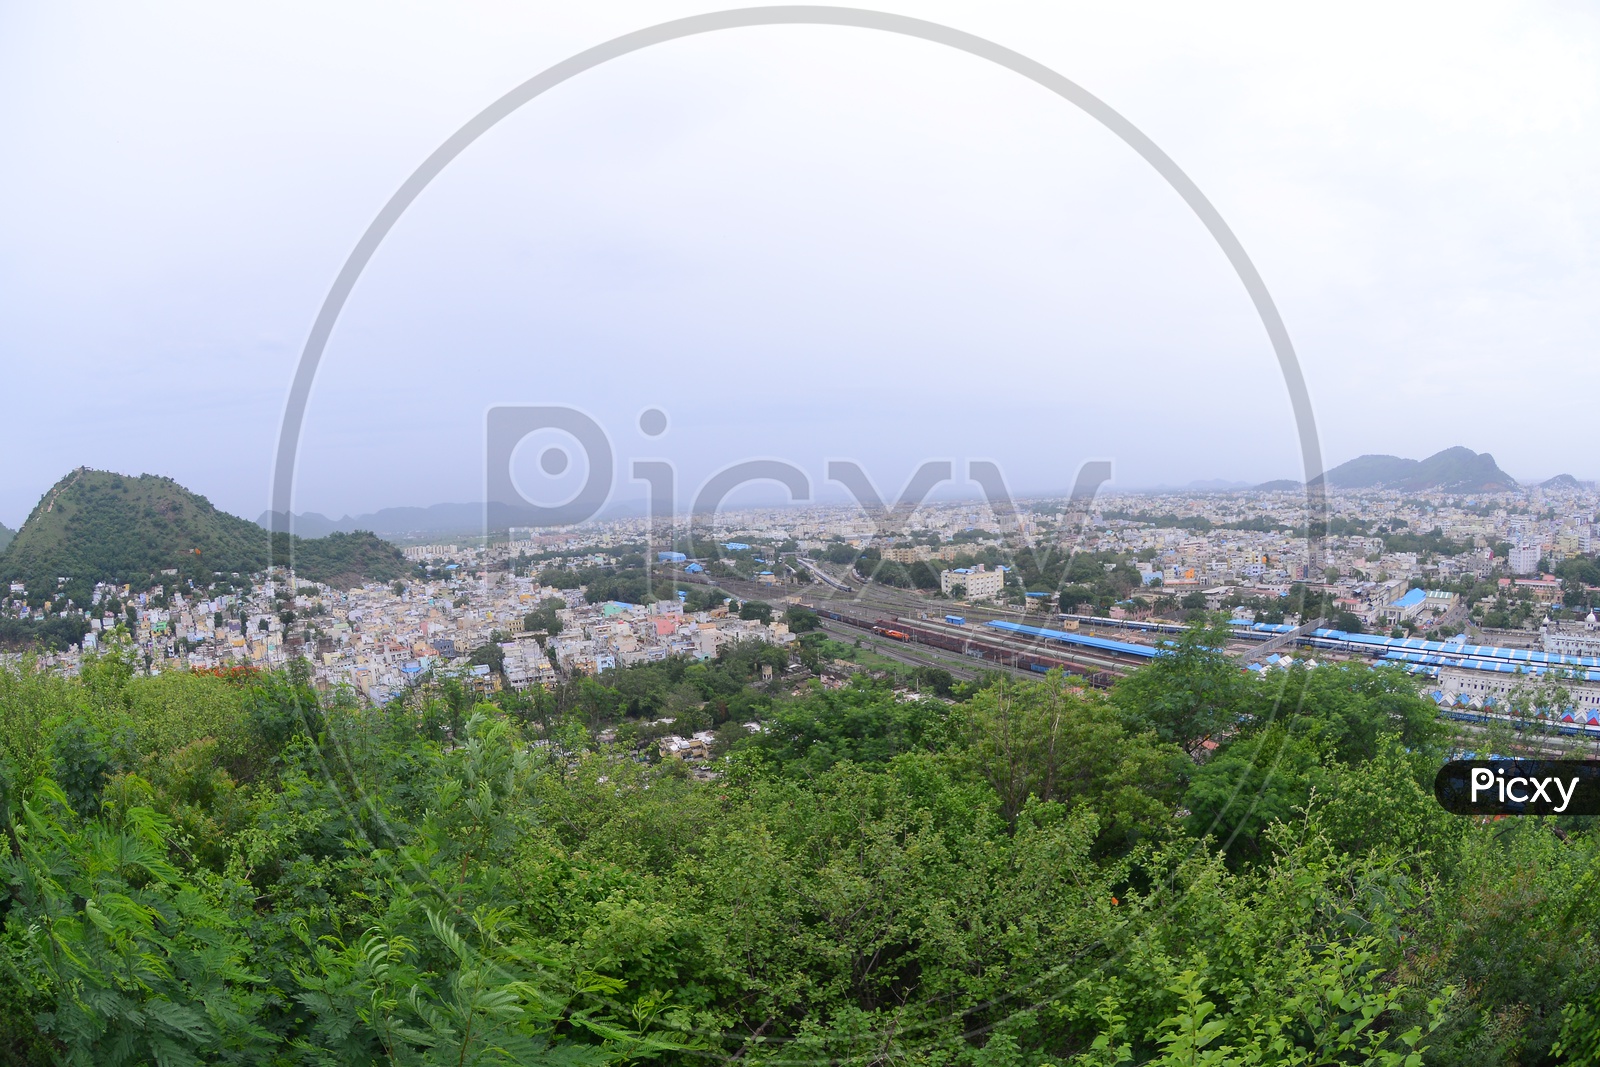 Aerial view of Vijayawada City and railway station and tracks